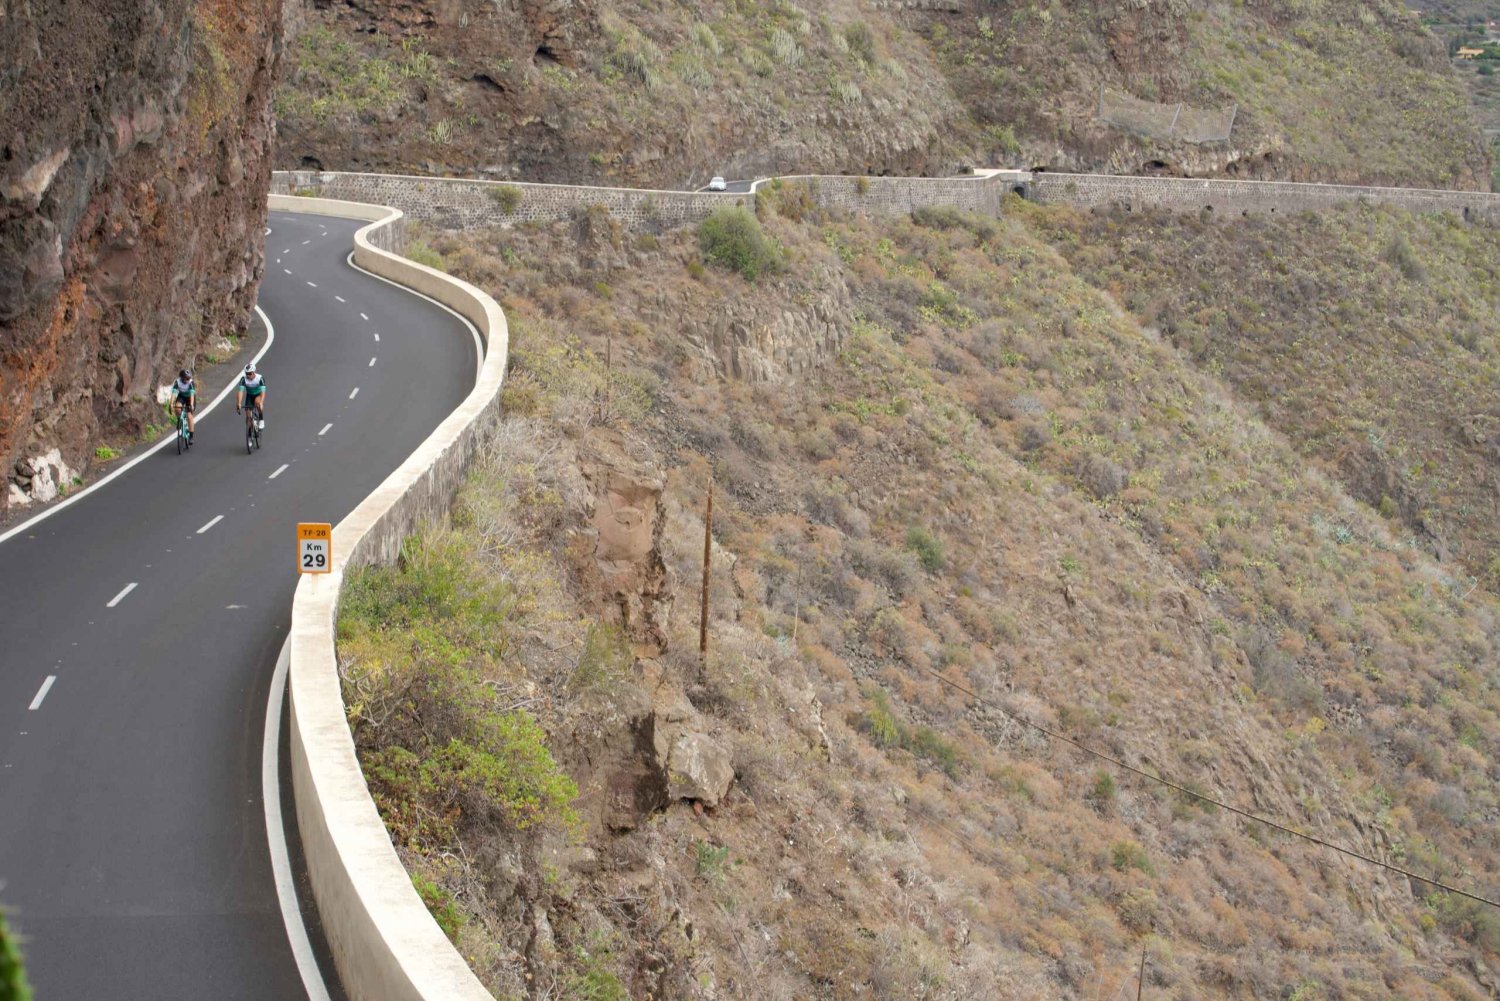 Tenerife: East Coast Cycling Tour